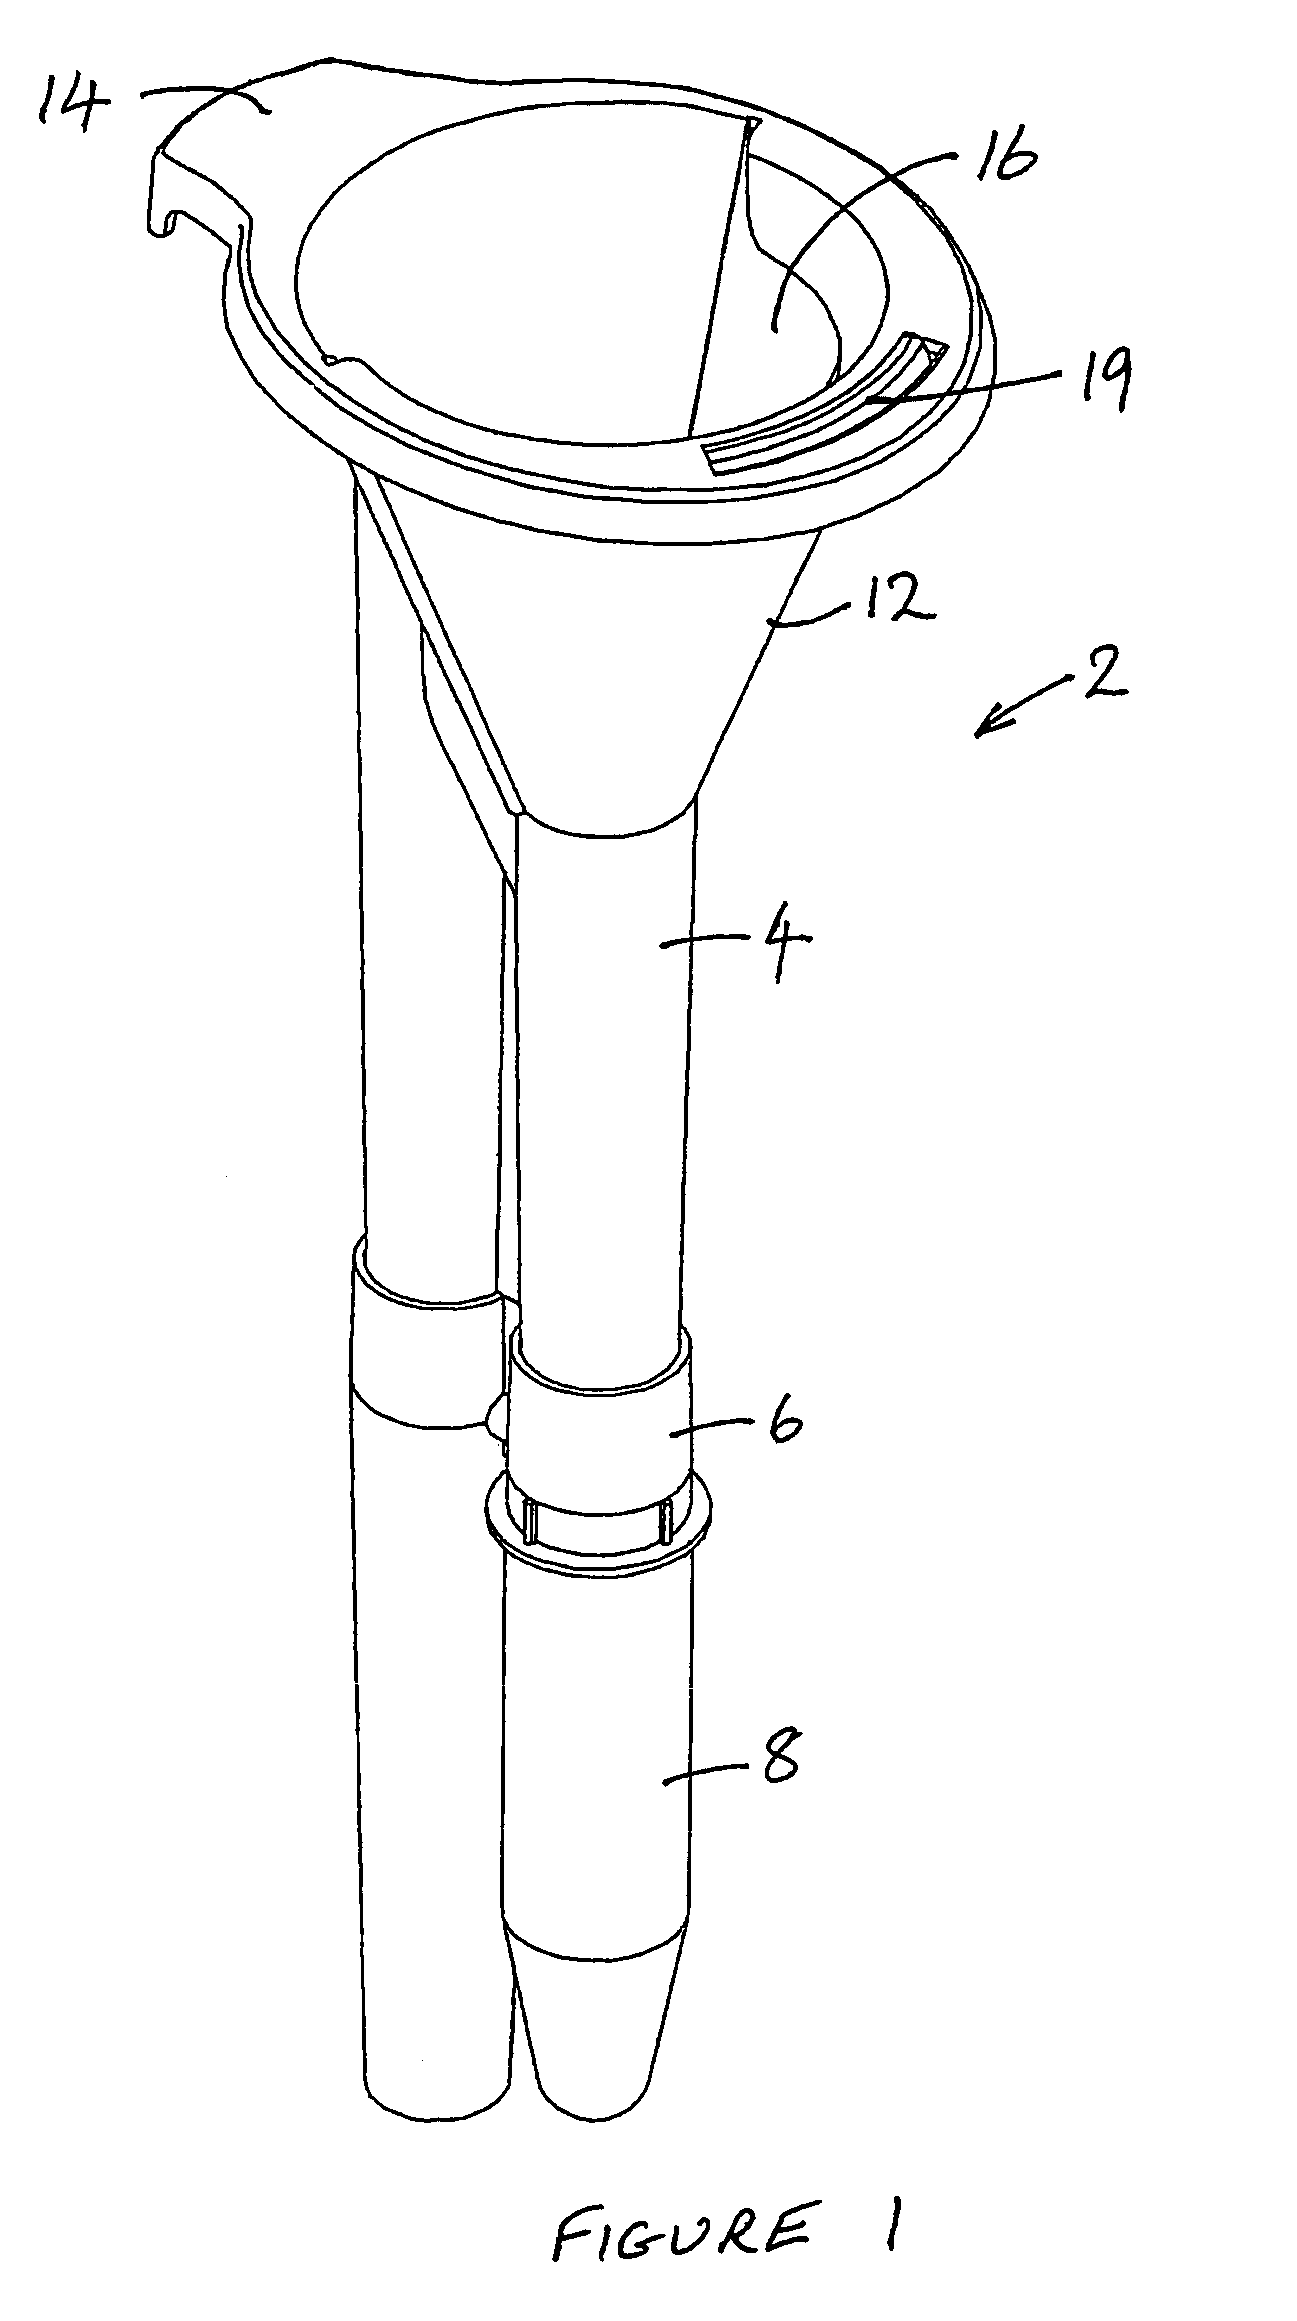 Liquid sampler and method